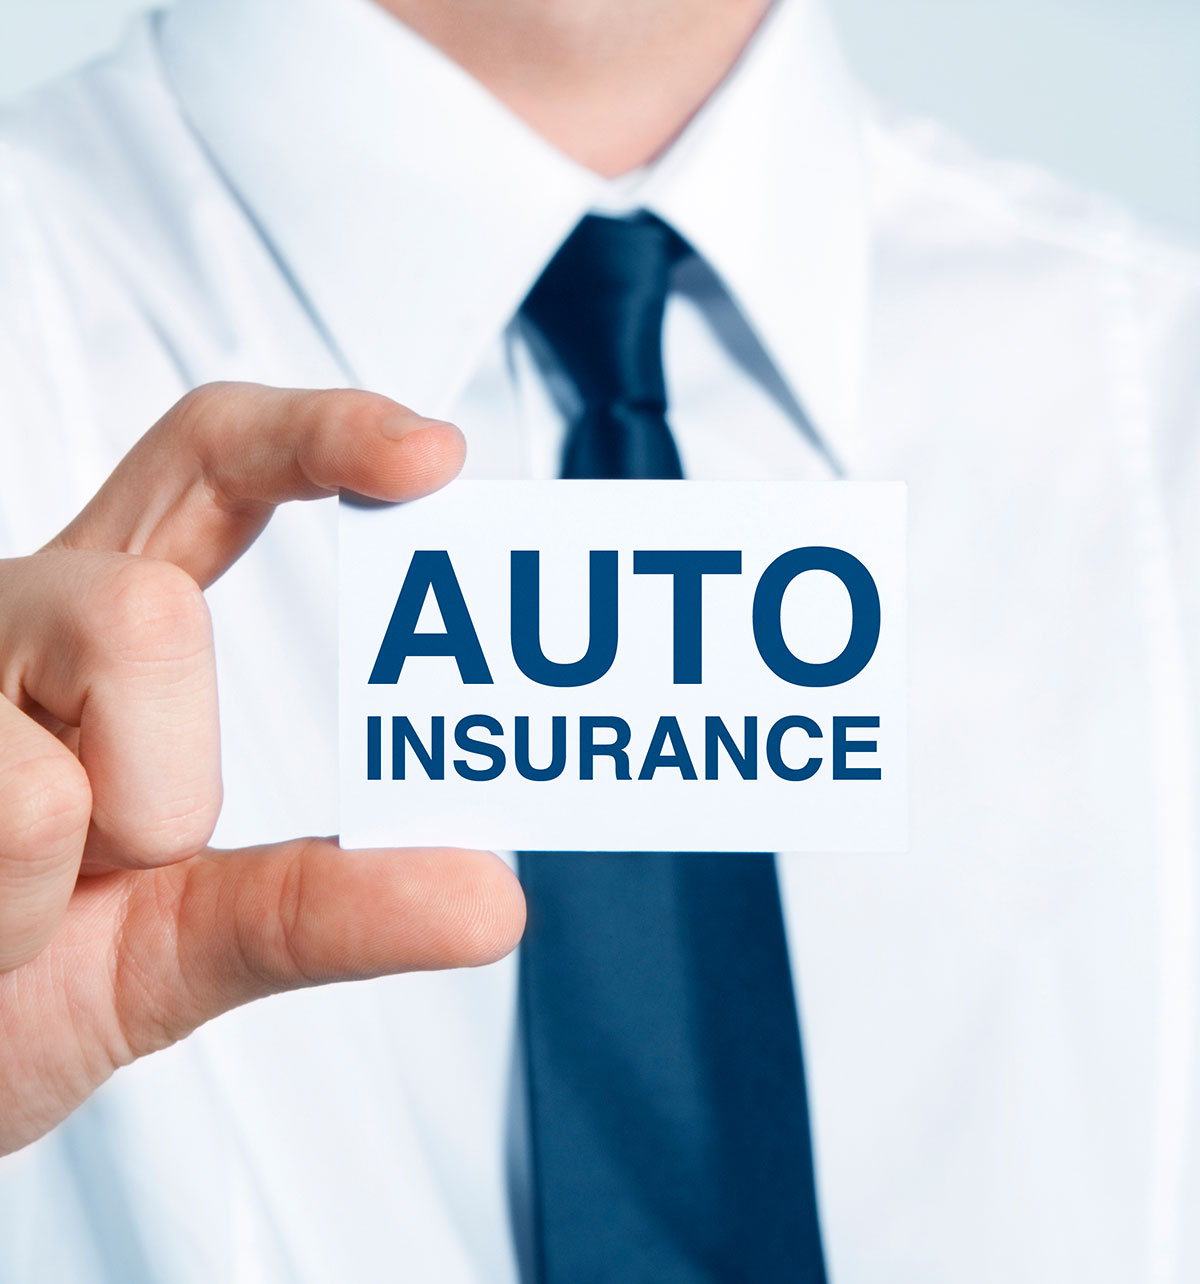 Auto Insurance - The Insurance City